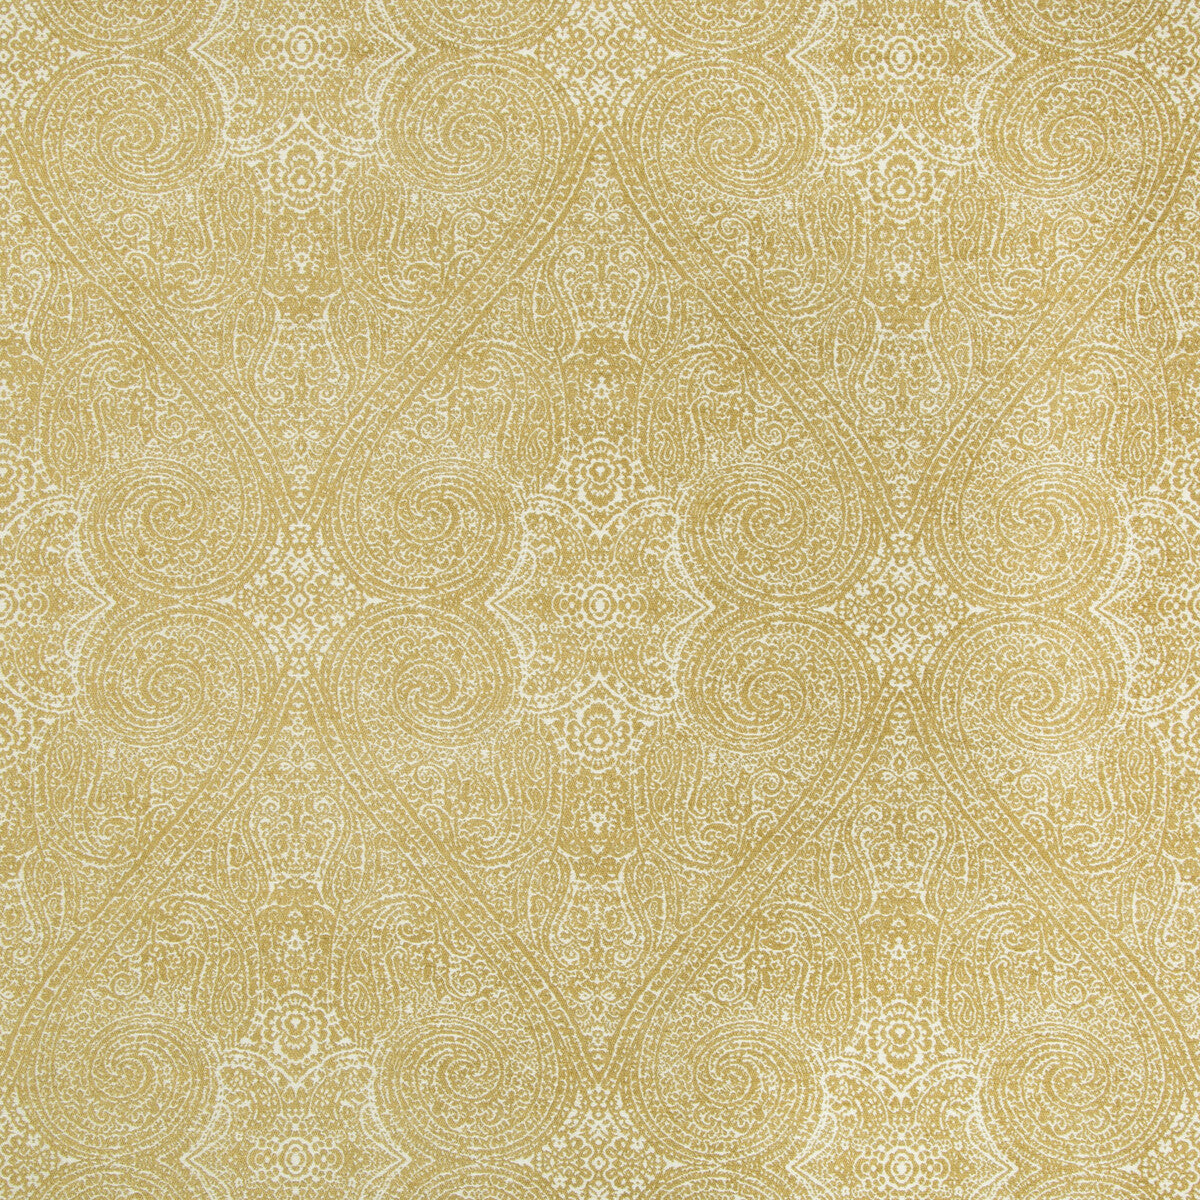 Kravet Design fabric in 34725-16 color - pattern 34725.16.0 - by Kravet Design in the Gis collection